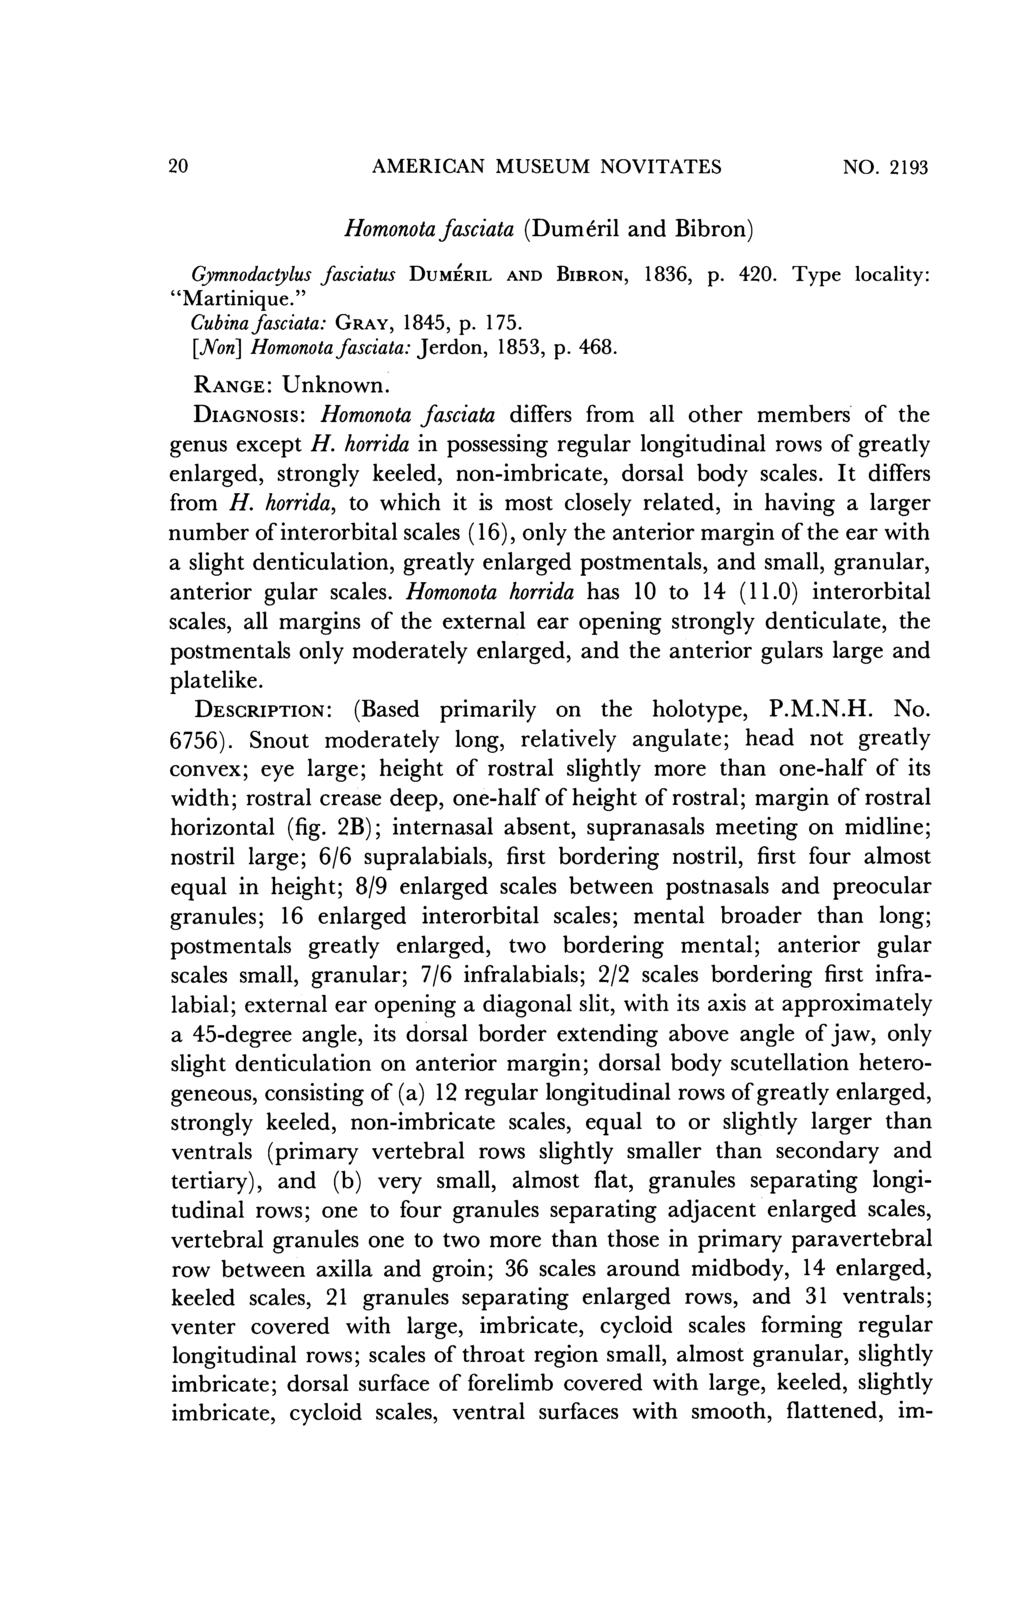 20 AMERICAN MUSEUM NOVITATES NO. 2193 Homonotafasciata (Dumeril and Bibron) Gymnodactylus fasciatus DUMEIRIL AND BIBRON, 1836, p. 420. Type locality: "Martinique." Cubinafasciata: GRAY, 1845, p. 175.